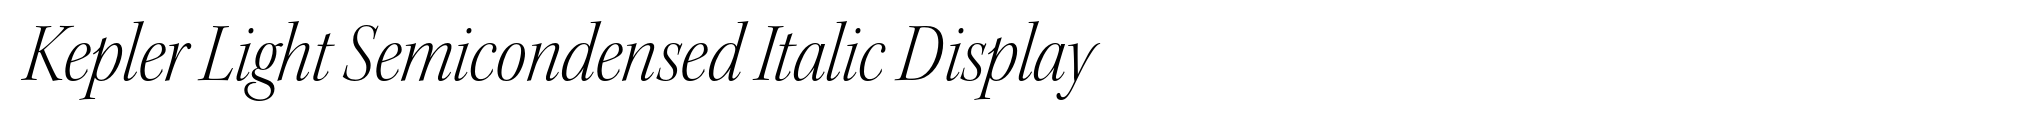 Kepler Light Semicondensed Italic Display image